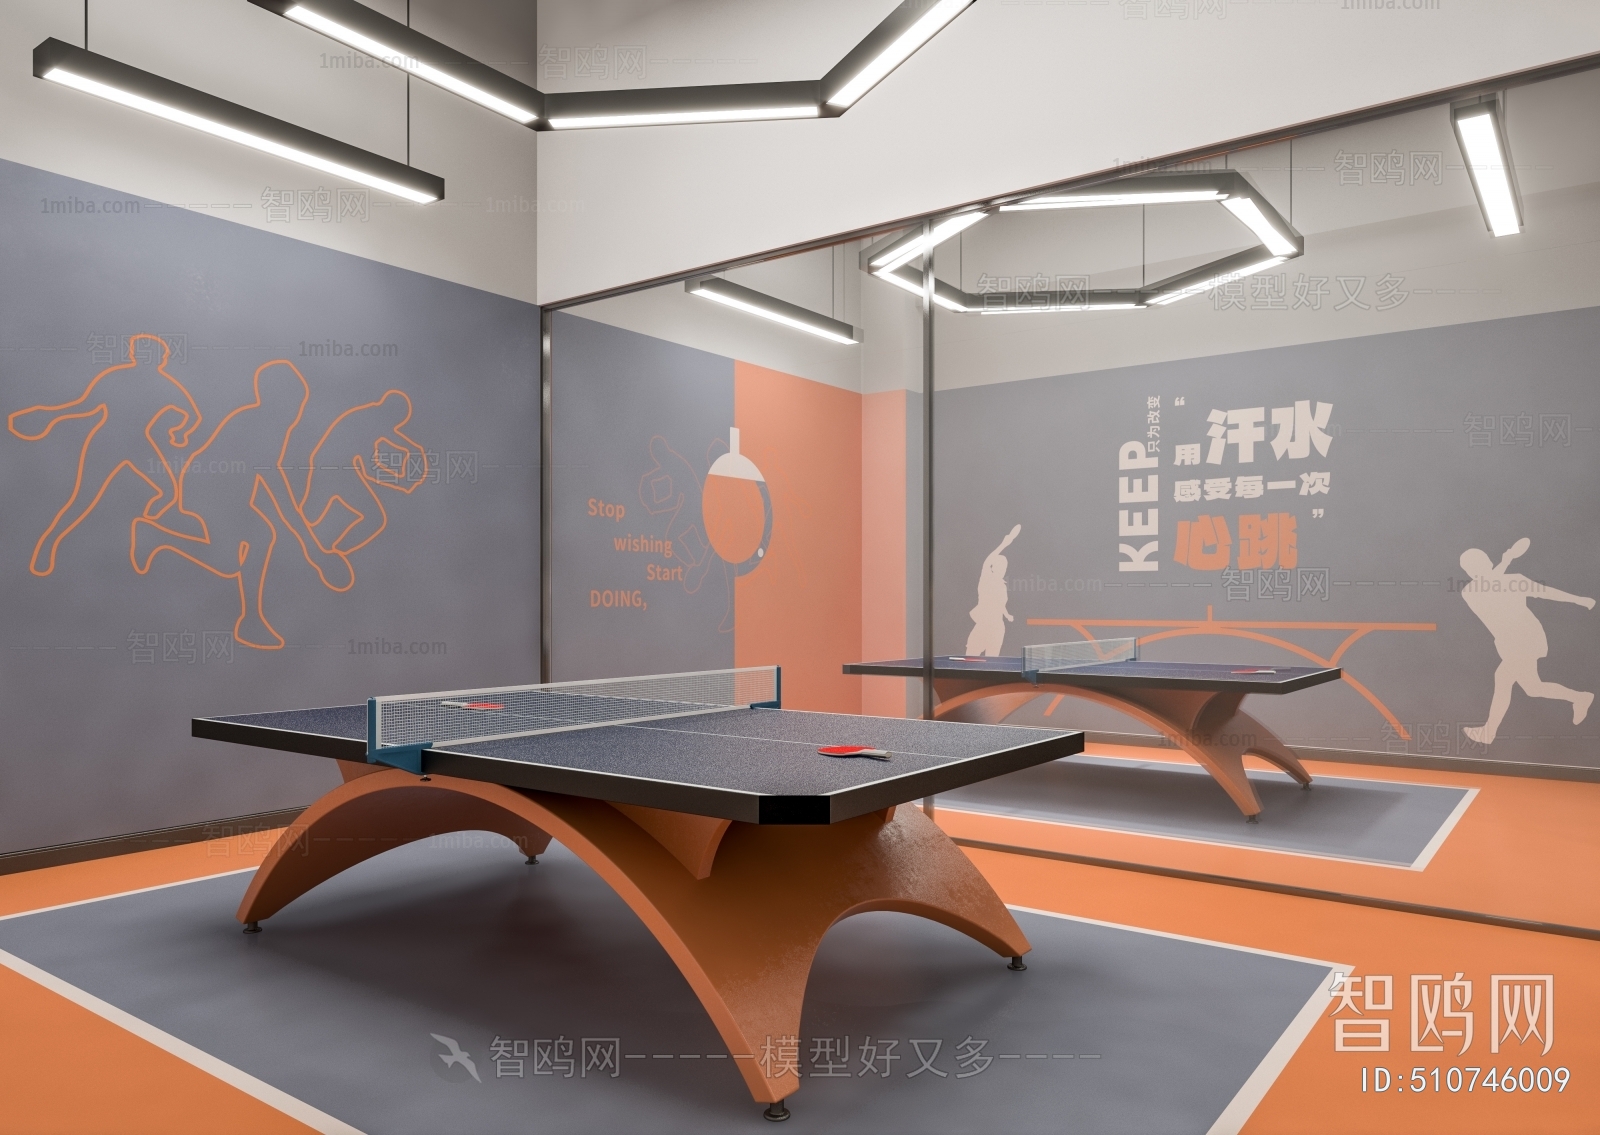 Modern Table Tennis Arena